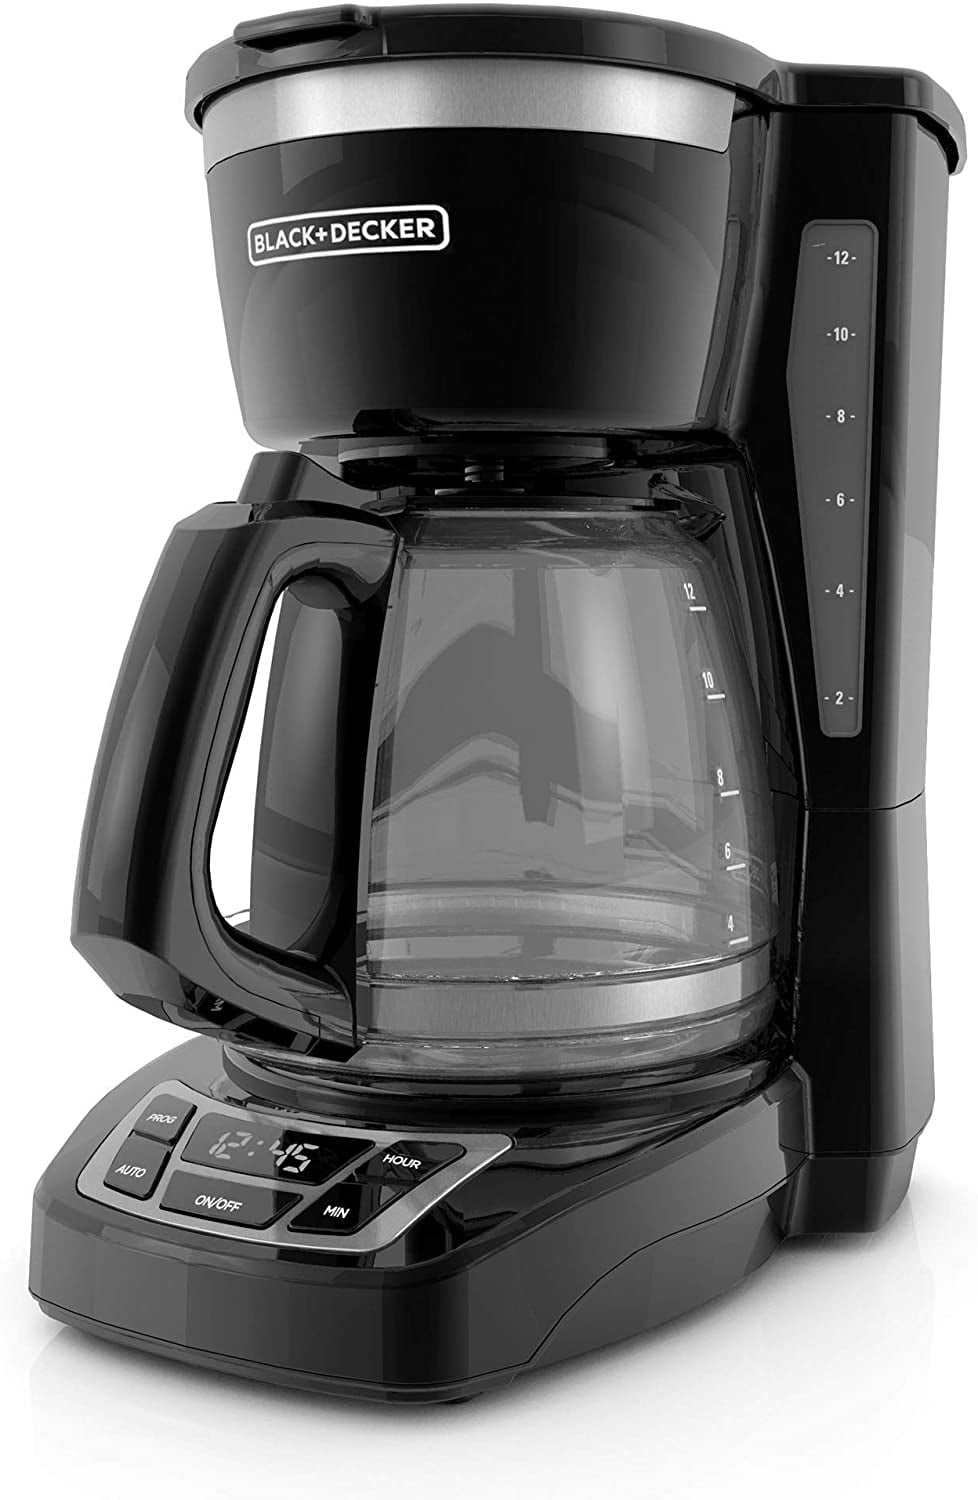 Black & Decker PRCM500-B5 Coffee Maker With Grinder 220 volts 50